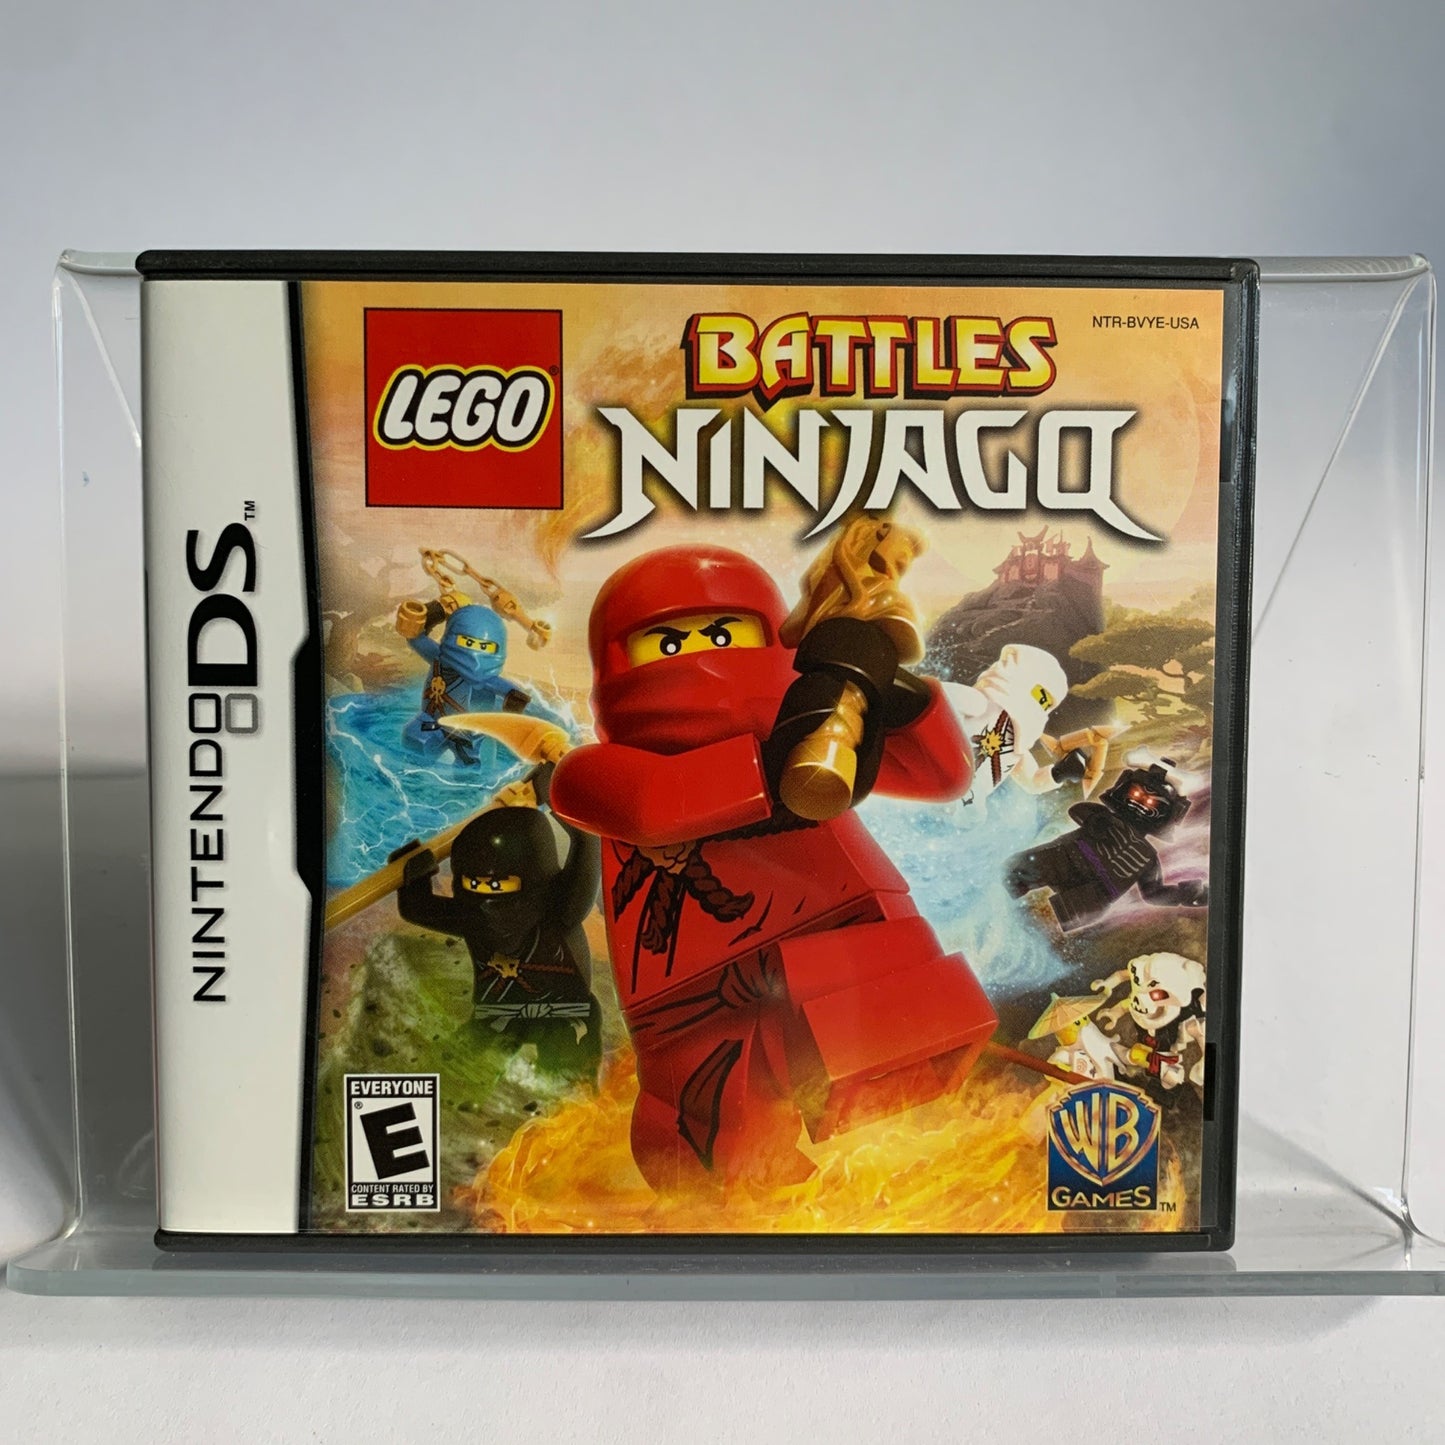 Nintendo DS Lego Battles Ninjago Game Cartridge Case Manual Complete